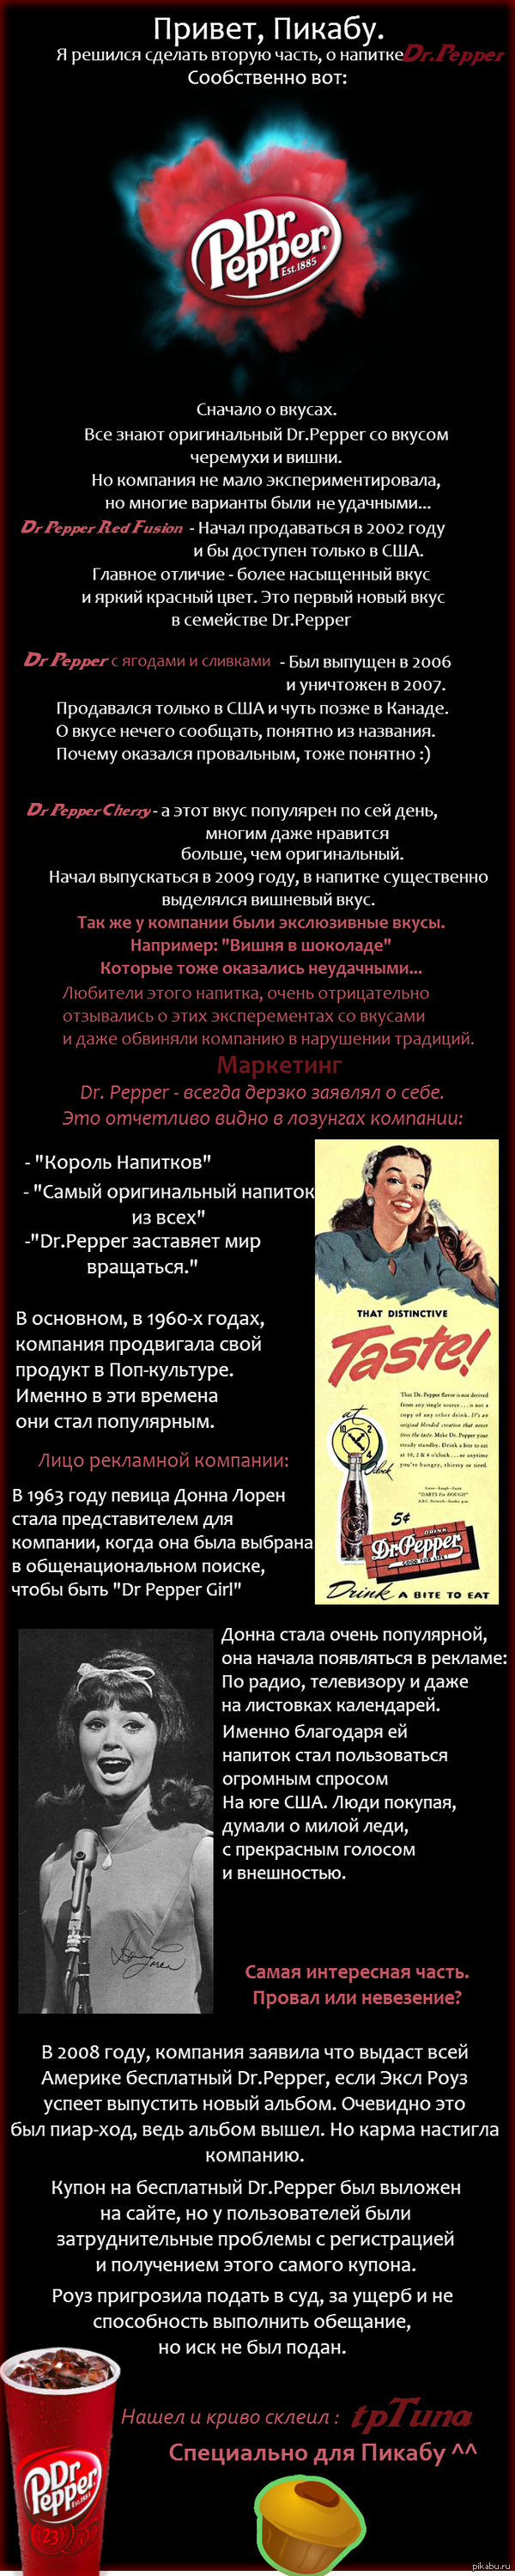   Dr.Pepper 1-  - <a href="http://pikabu.ru/story/istoriya_drpepper_1801430">http://pikabu.ru/story/_1801430</a>